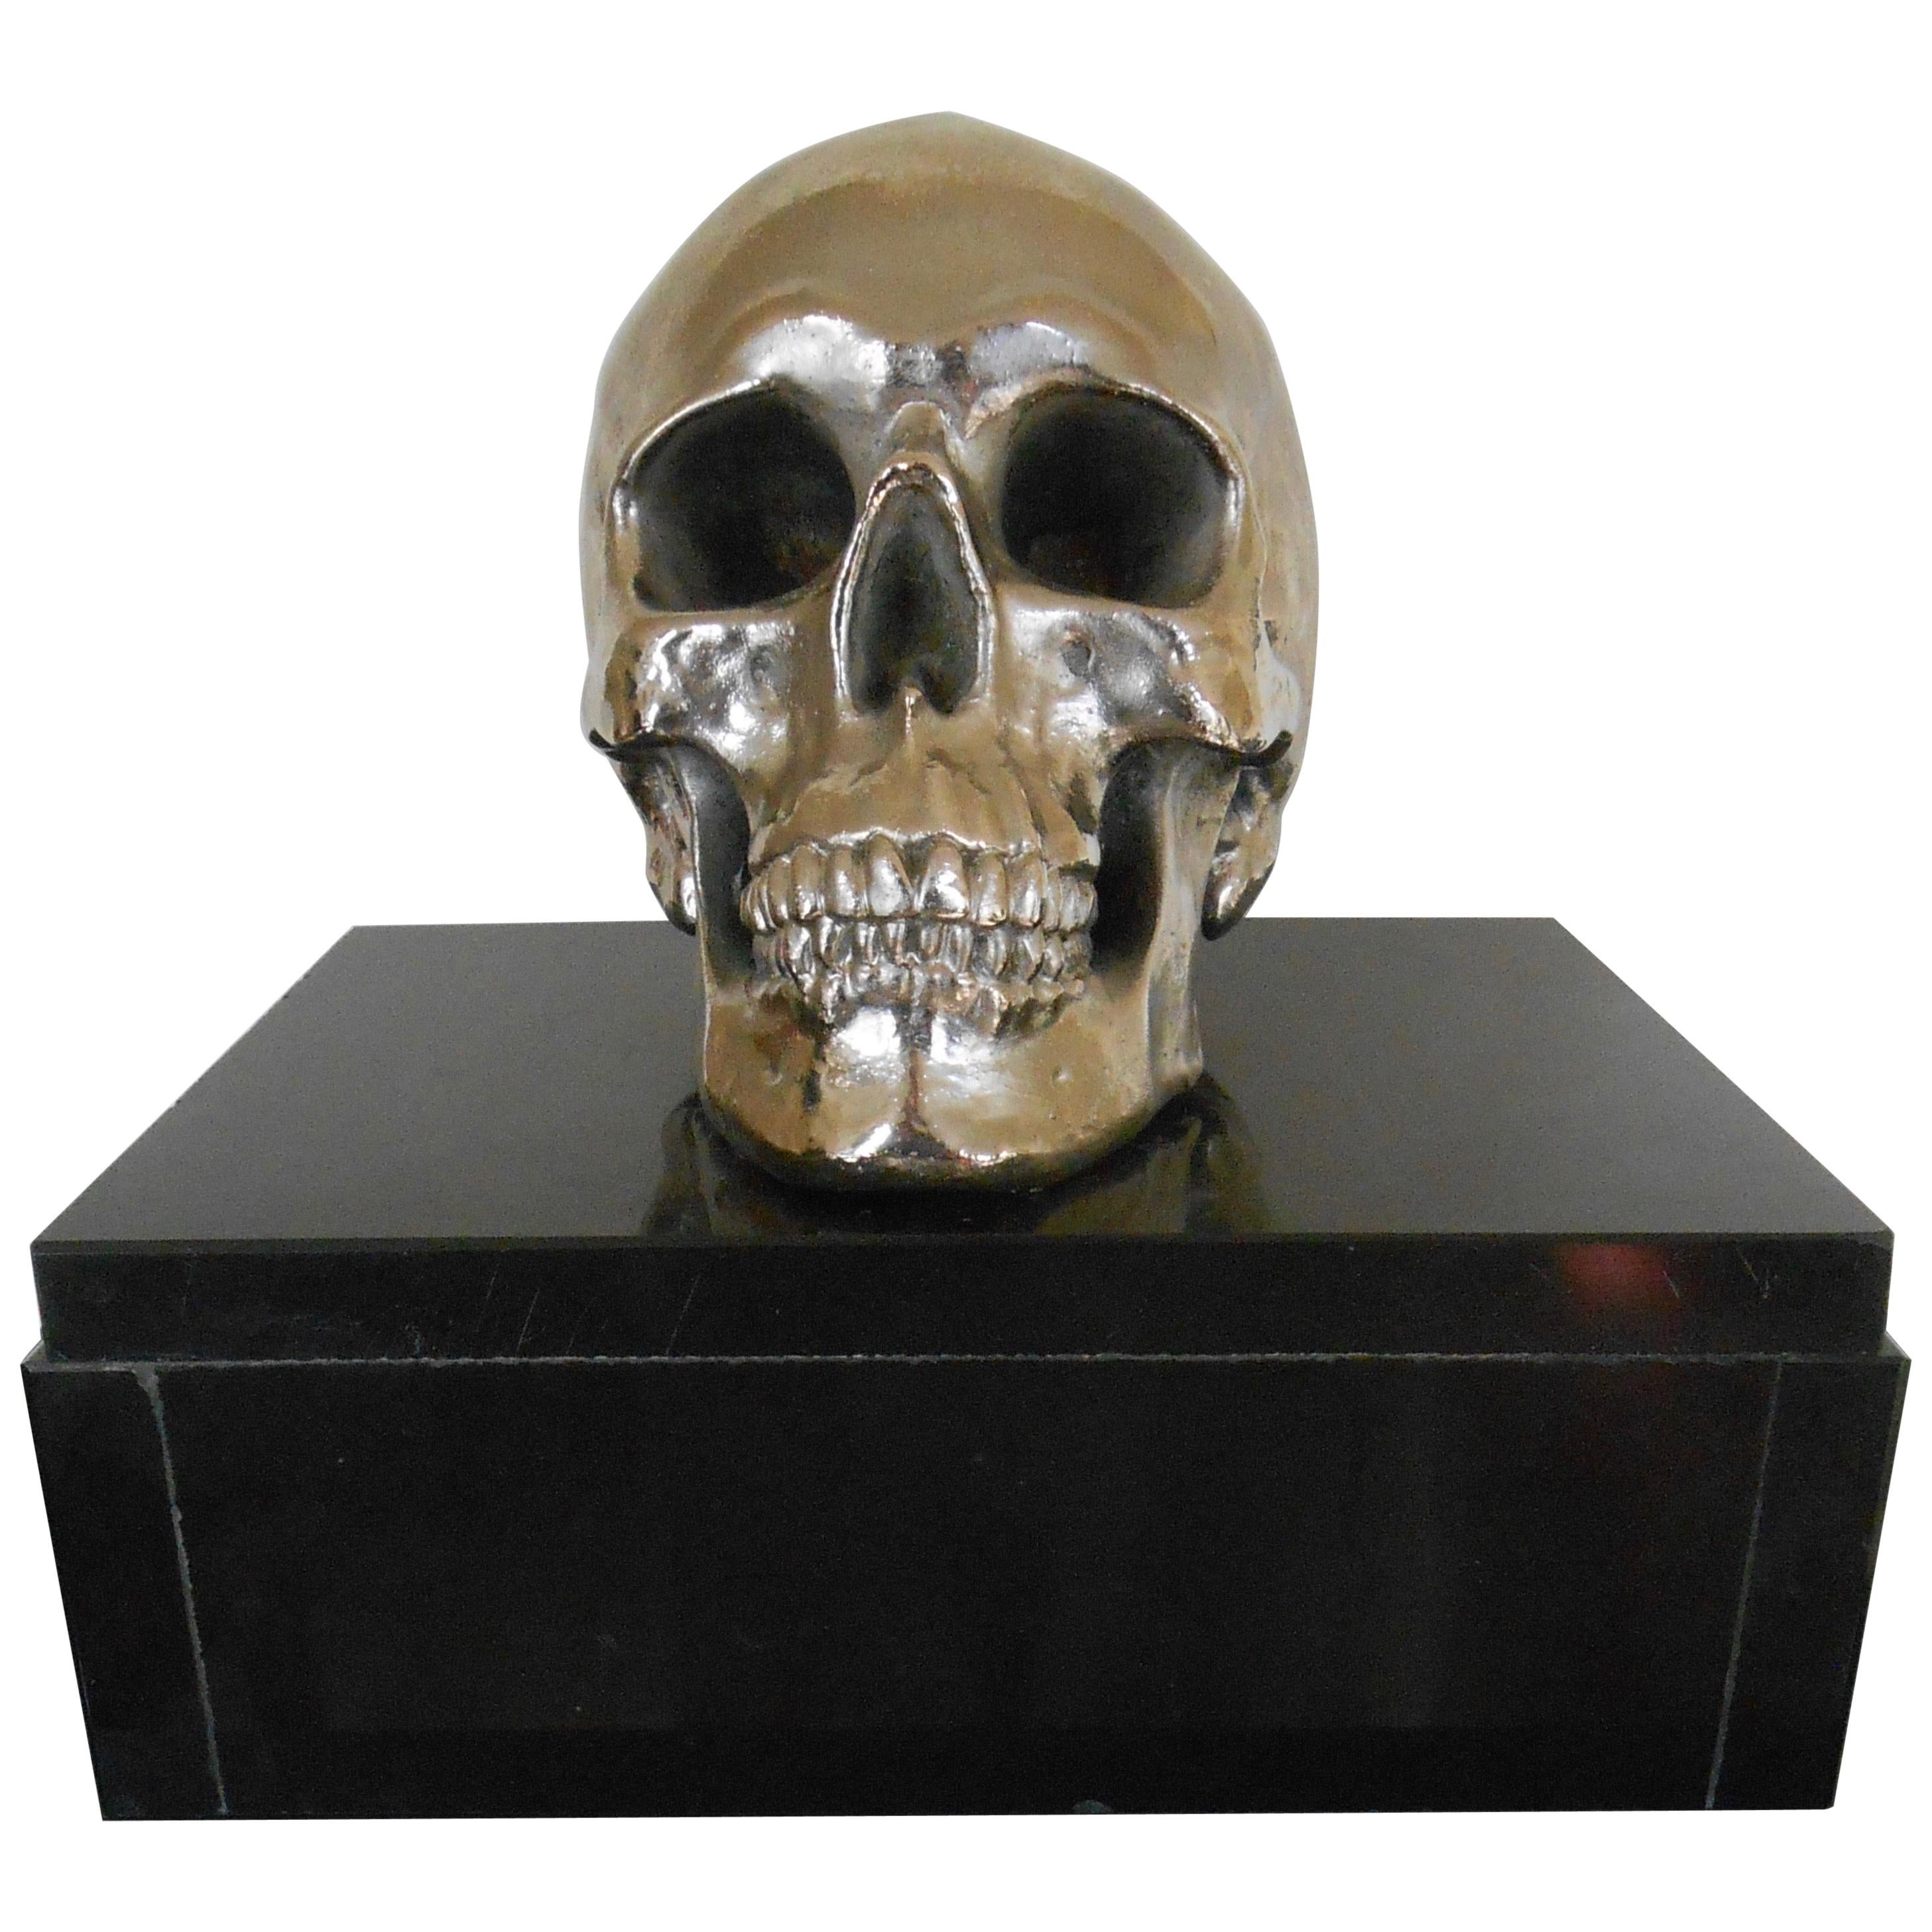 Massive Nickeled Resin Skull Signed Y.D., Belgium, 1989